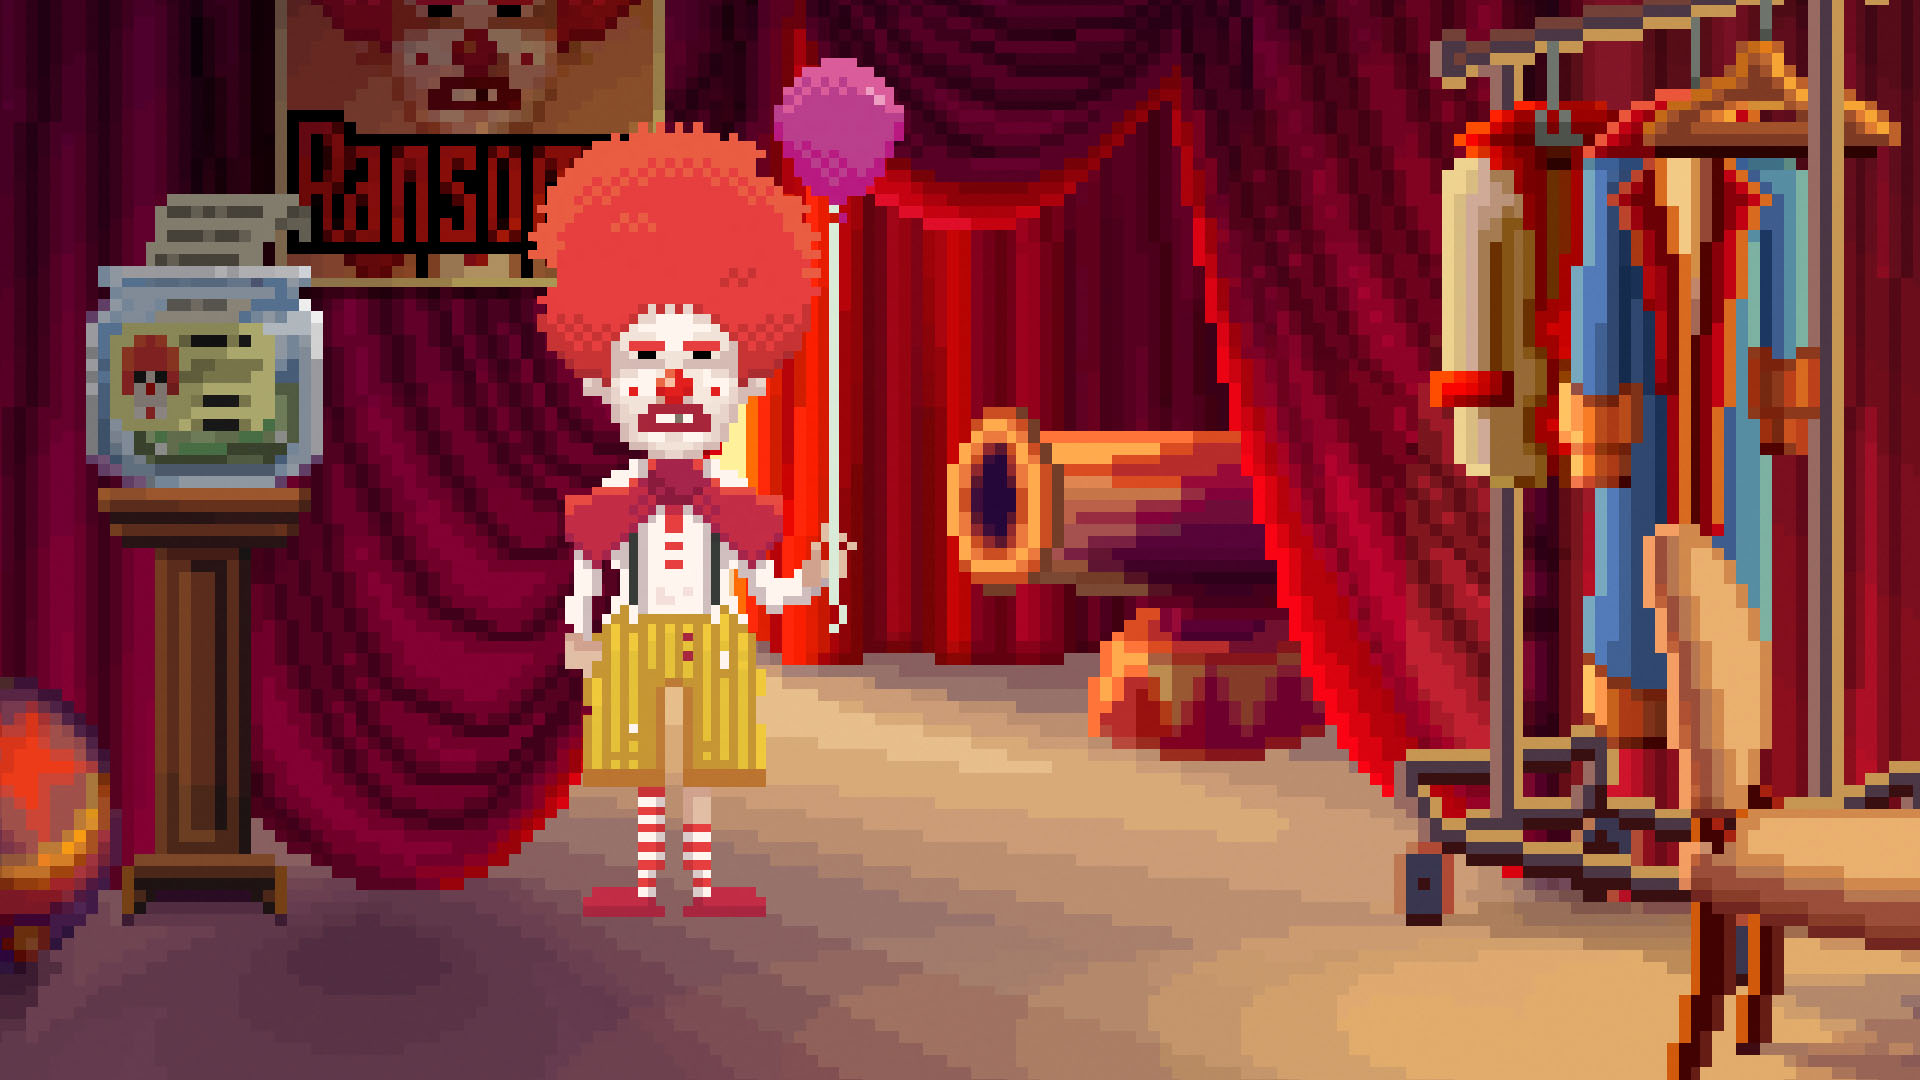 Клоун пасхалка. Клоун Рэнсом. Музей клоунов игра. Игра про маленького клоуна.